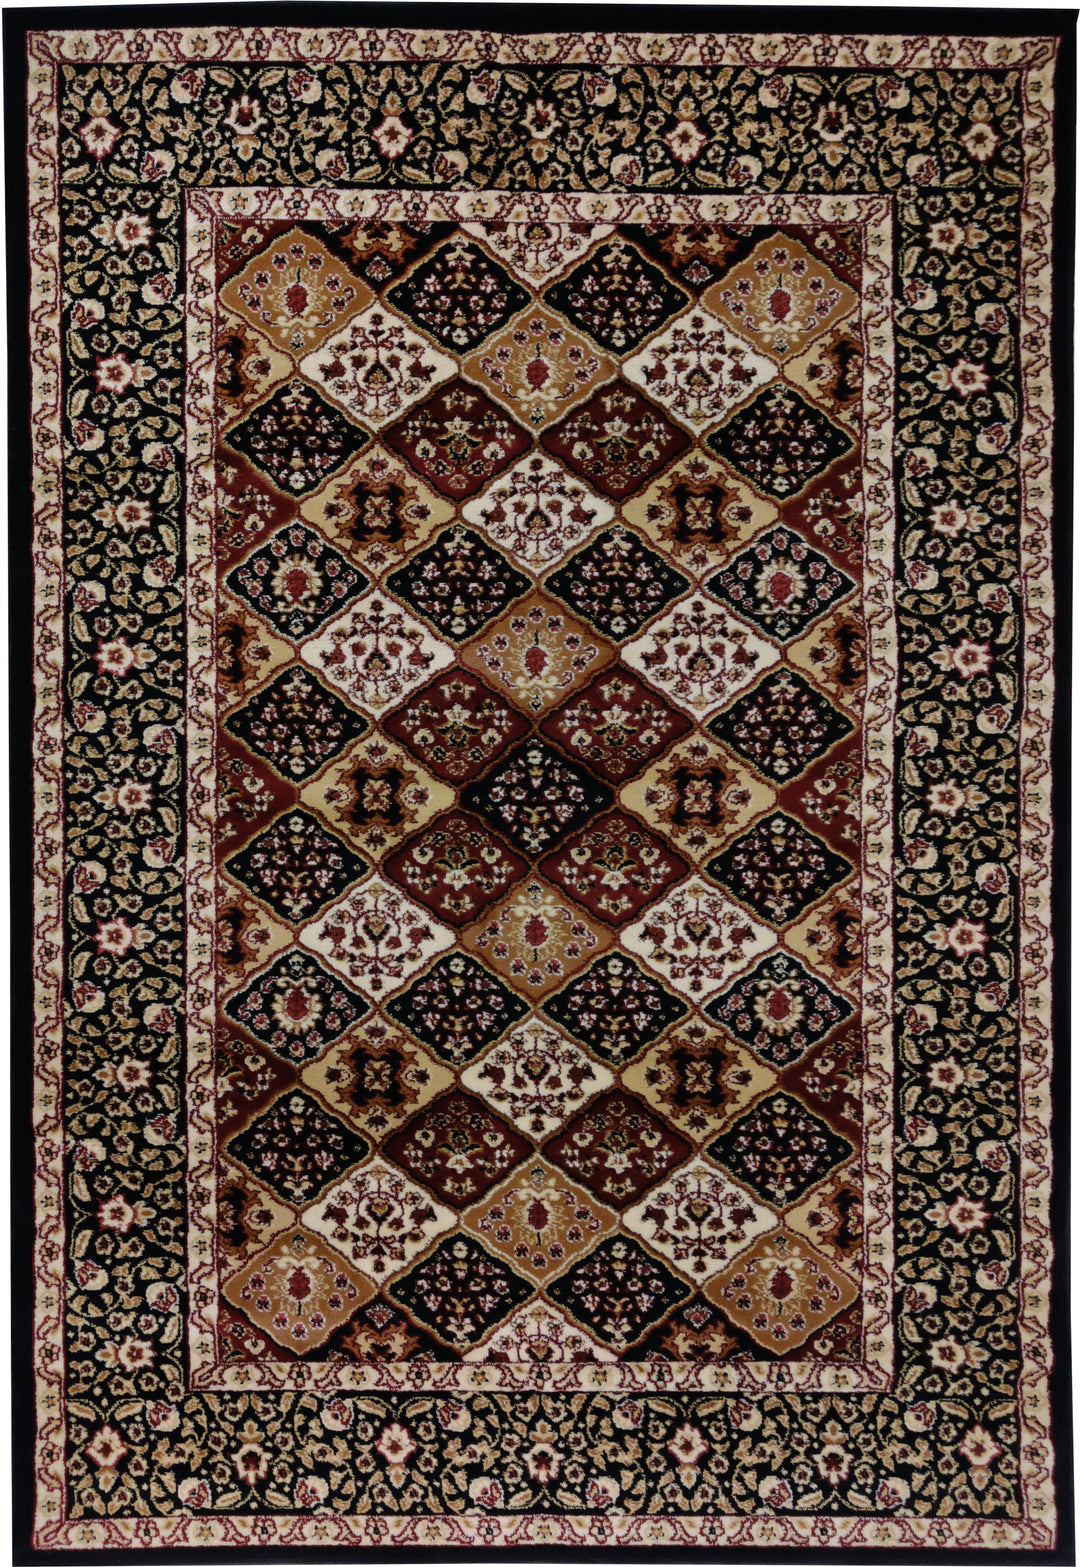 Elegant Traditional Persian-Inspired Rug